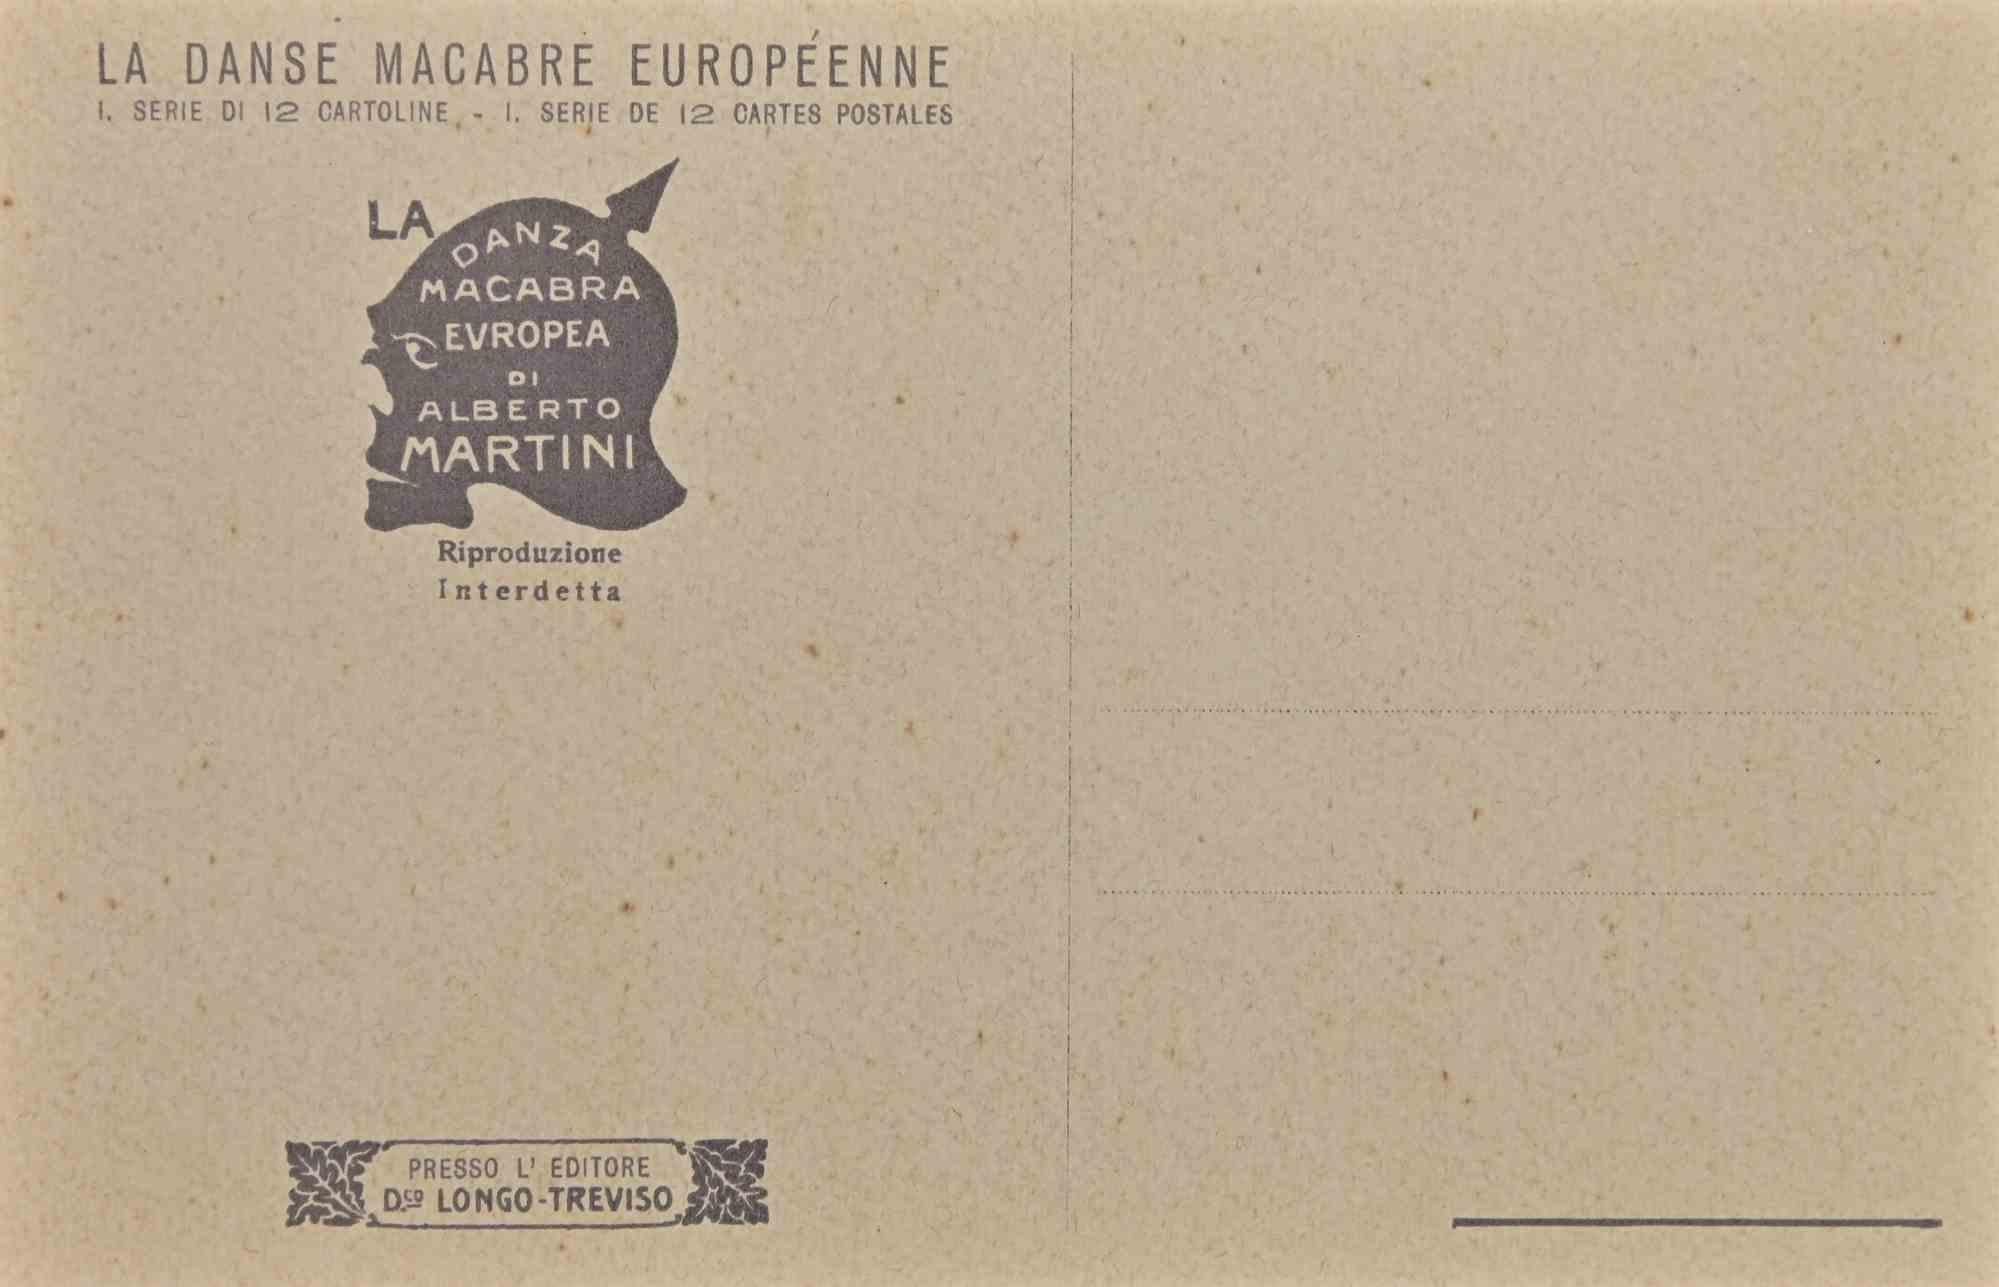 The European Macabre Dance N.3  - Lithograph by A. Martini - 1915 - Print by Alberto Martini